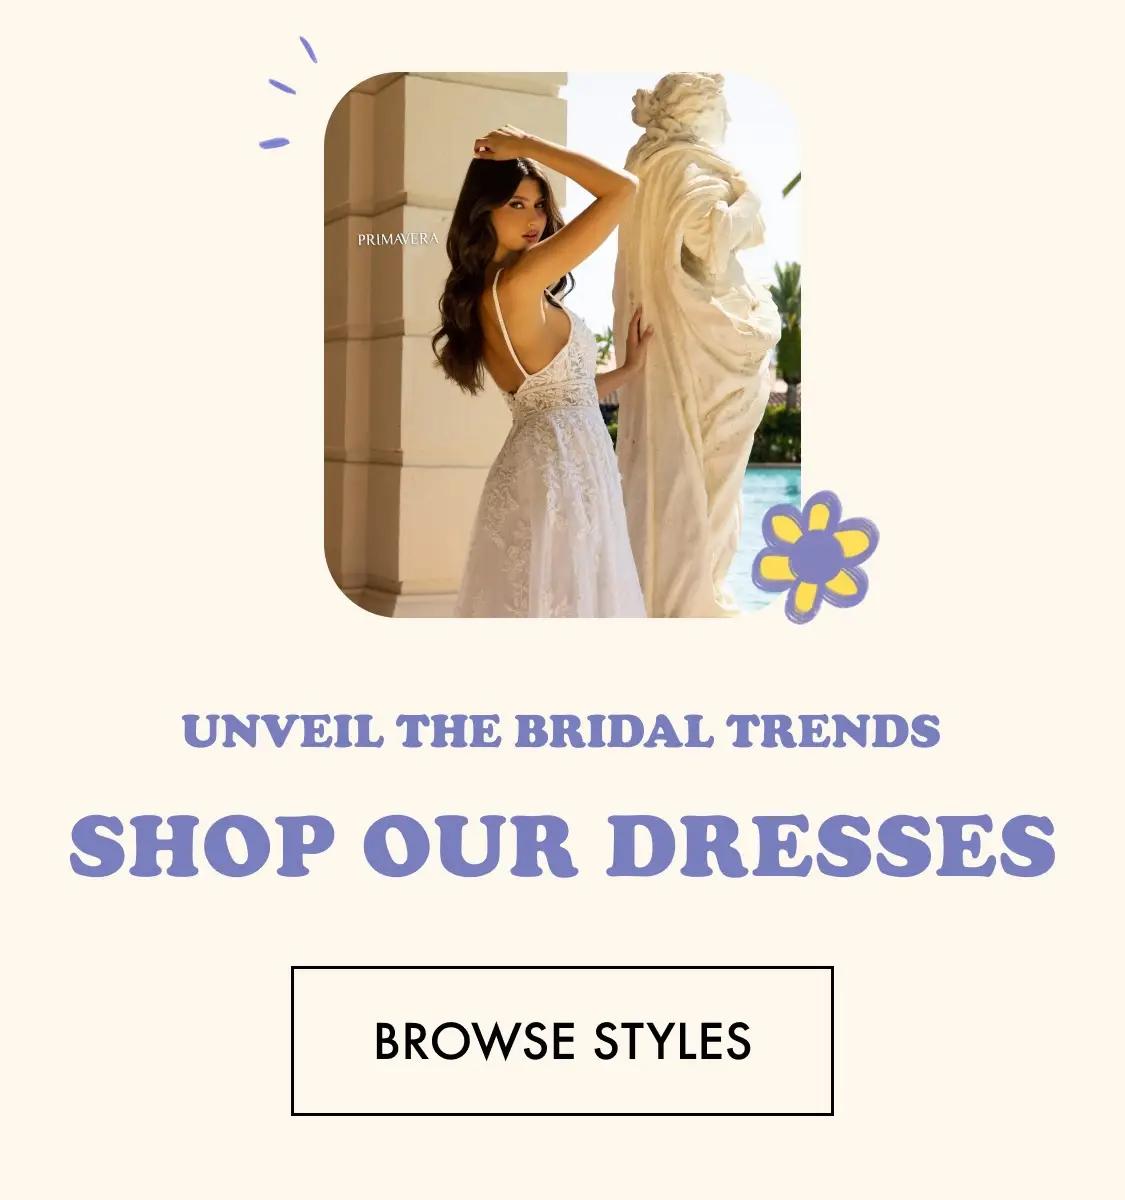 bridall dresses